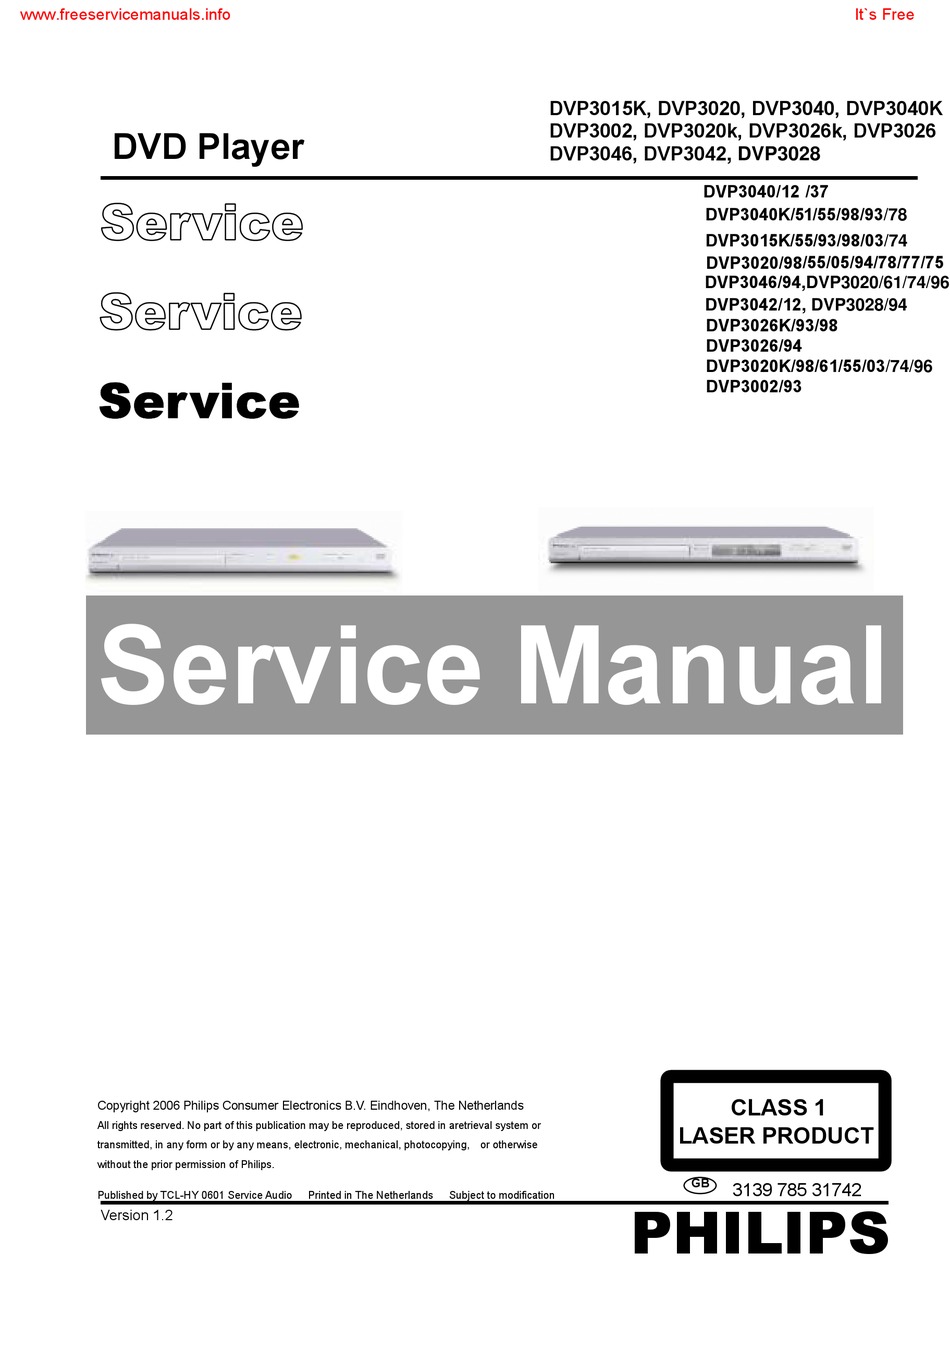 Service manual philips. DVD-плеер Philips dvp5960. Philips DVP 3020 K. Дивиди плеер Philips.инструкция. Philips MX 8000 service manual.